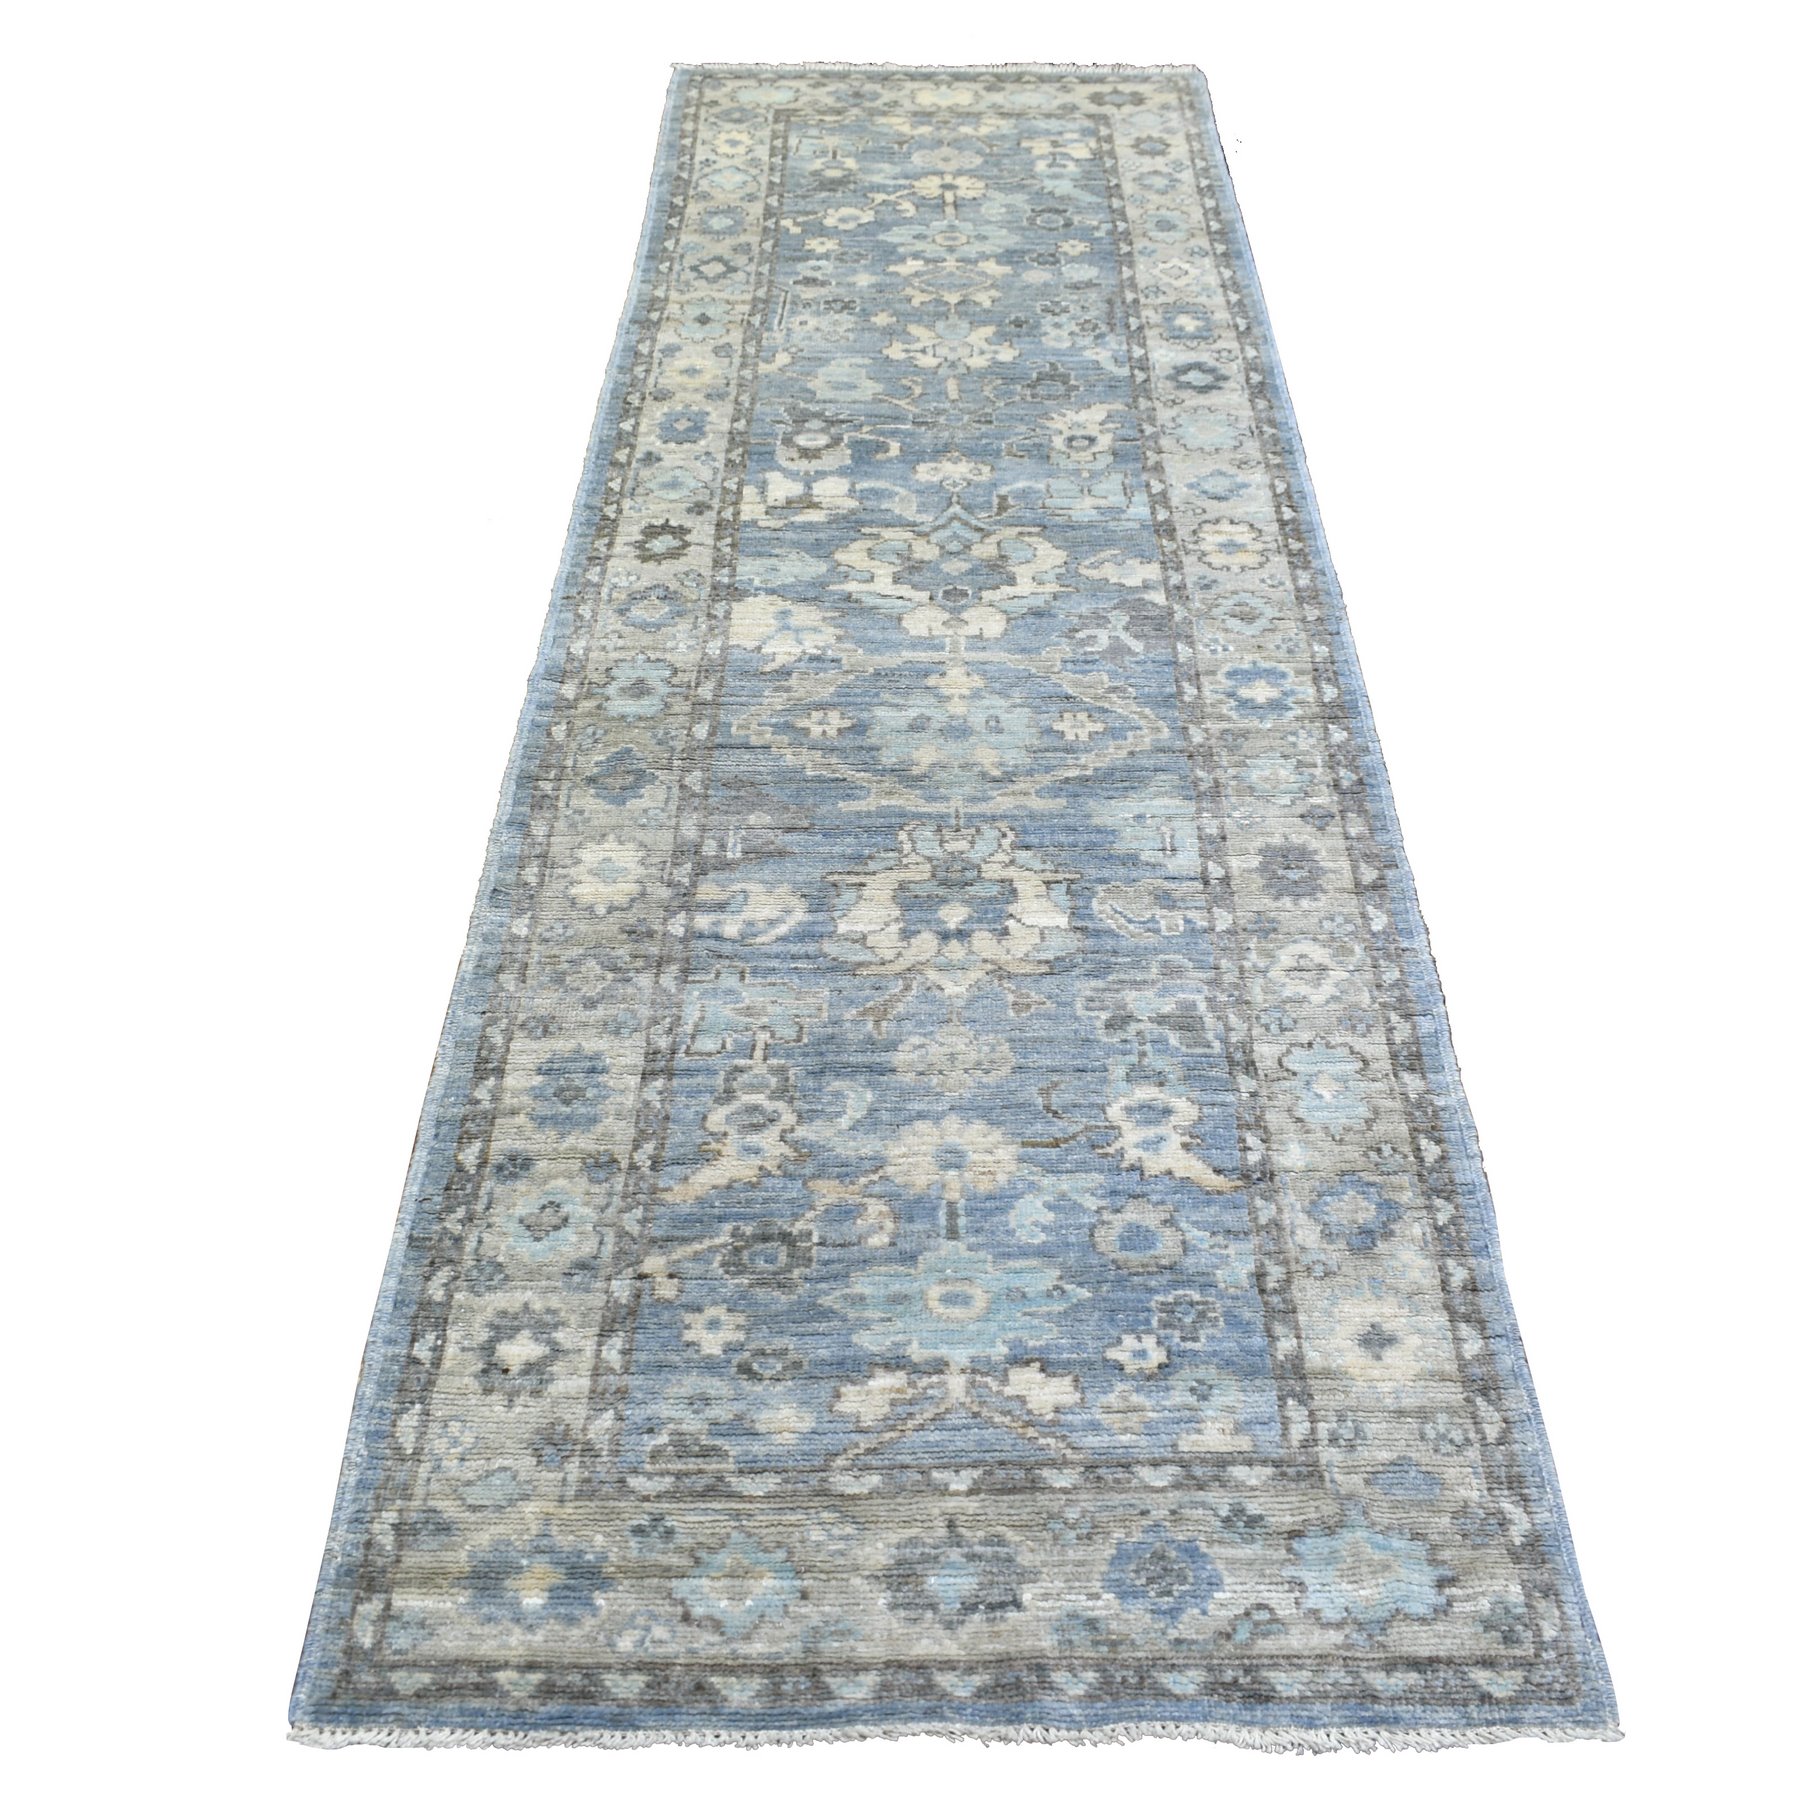 3'x9'9" Light Blue Angora Oushak Leaf Design Natural Dyes, Afghan Wool Hand Woven Runner Oriental Rug 